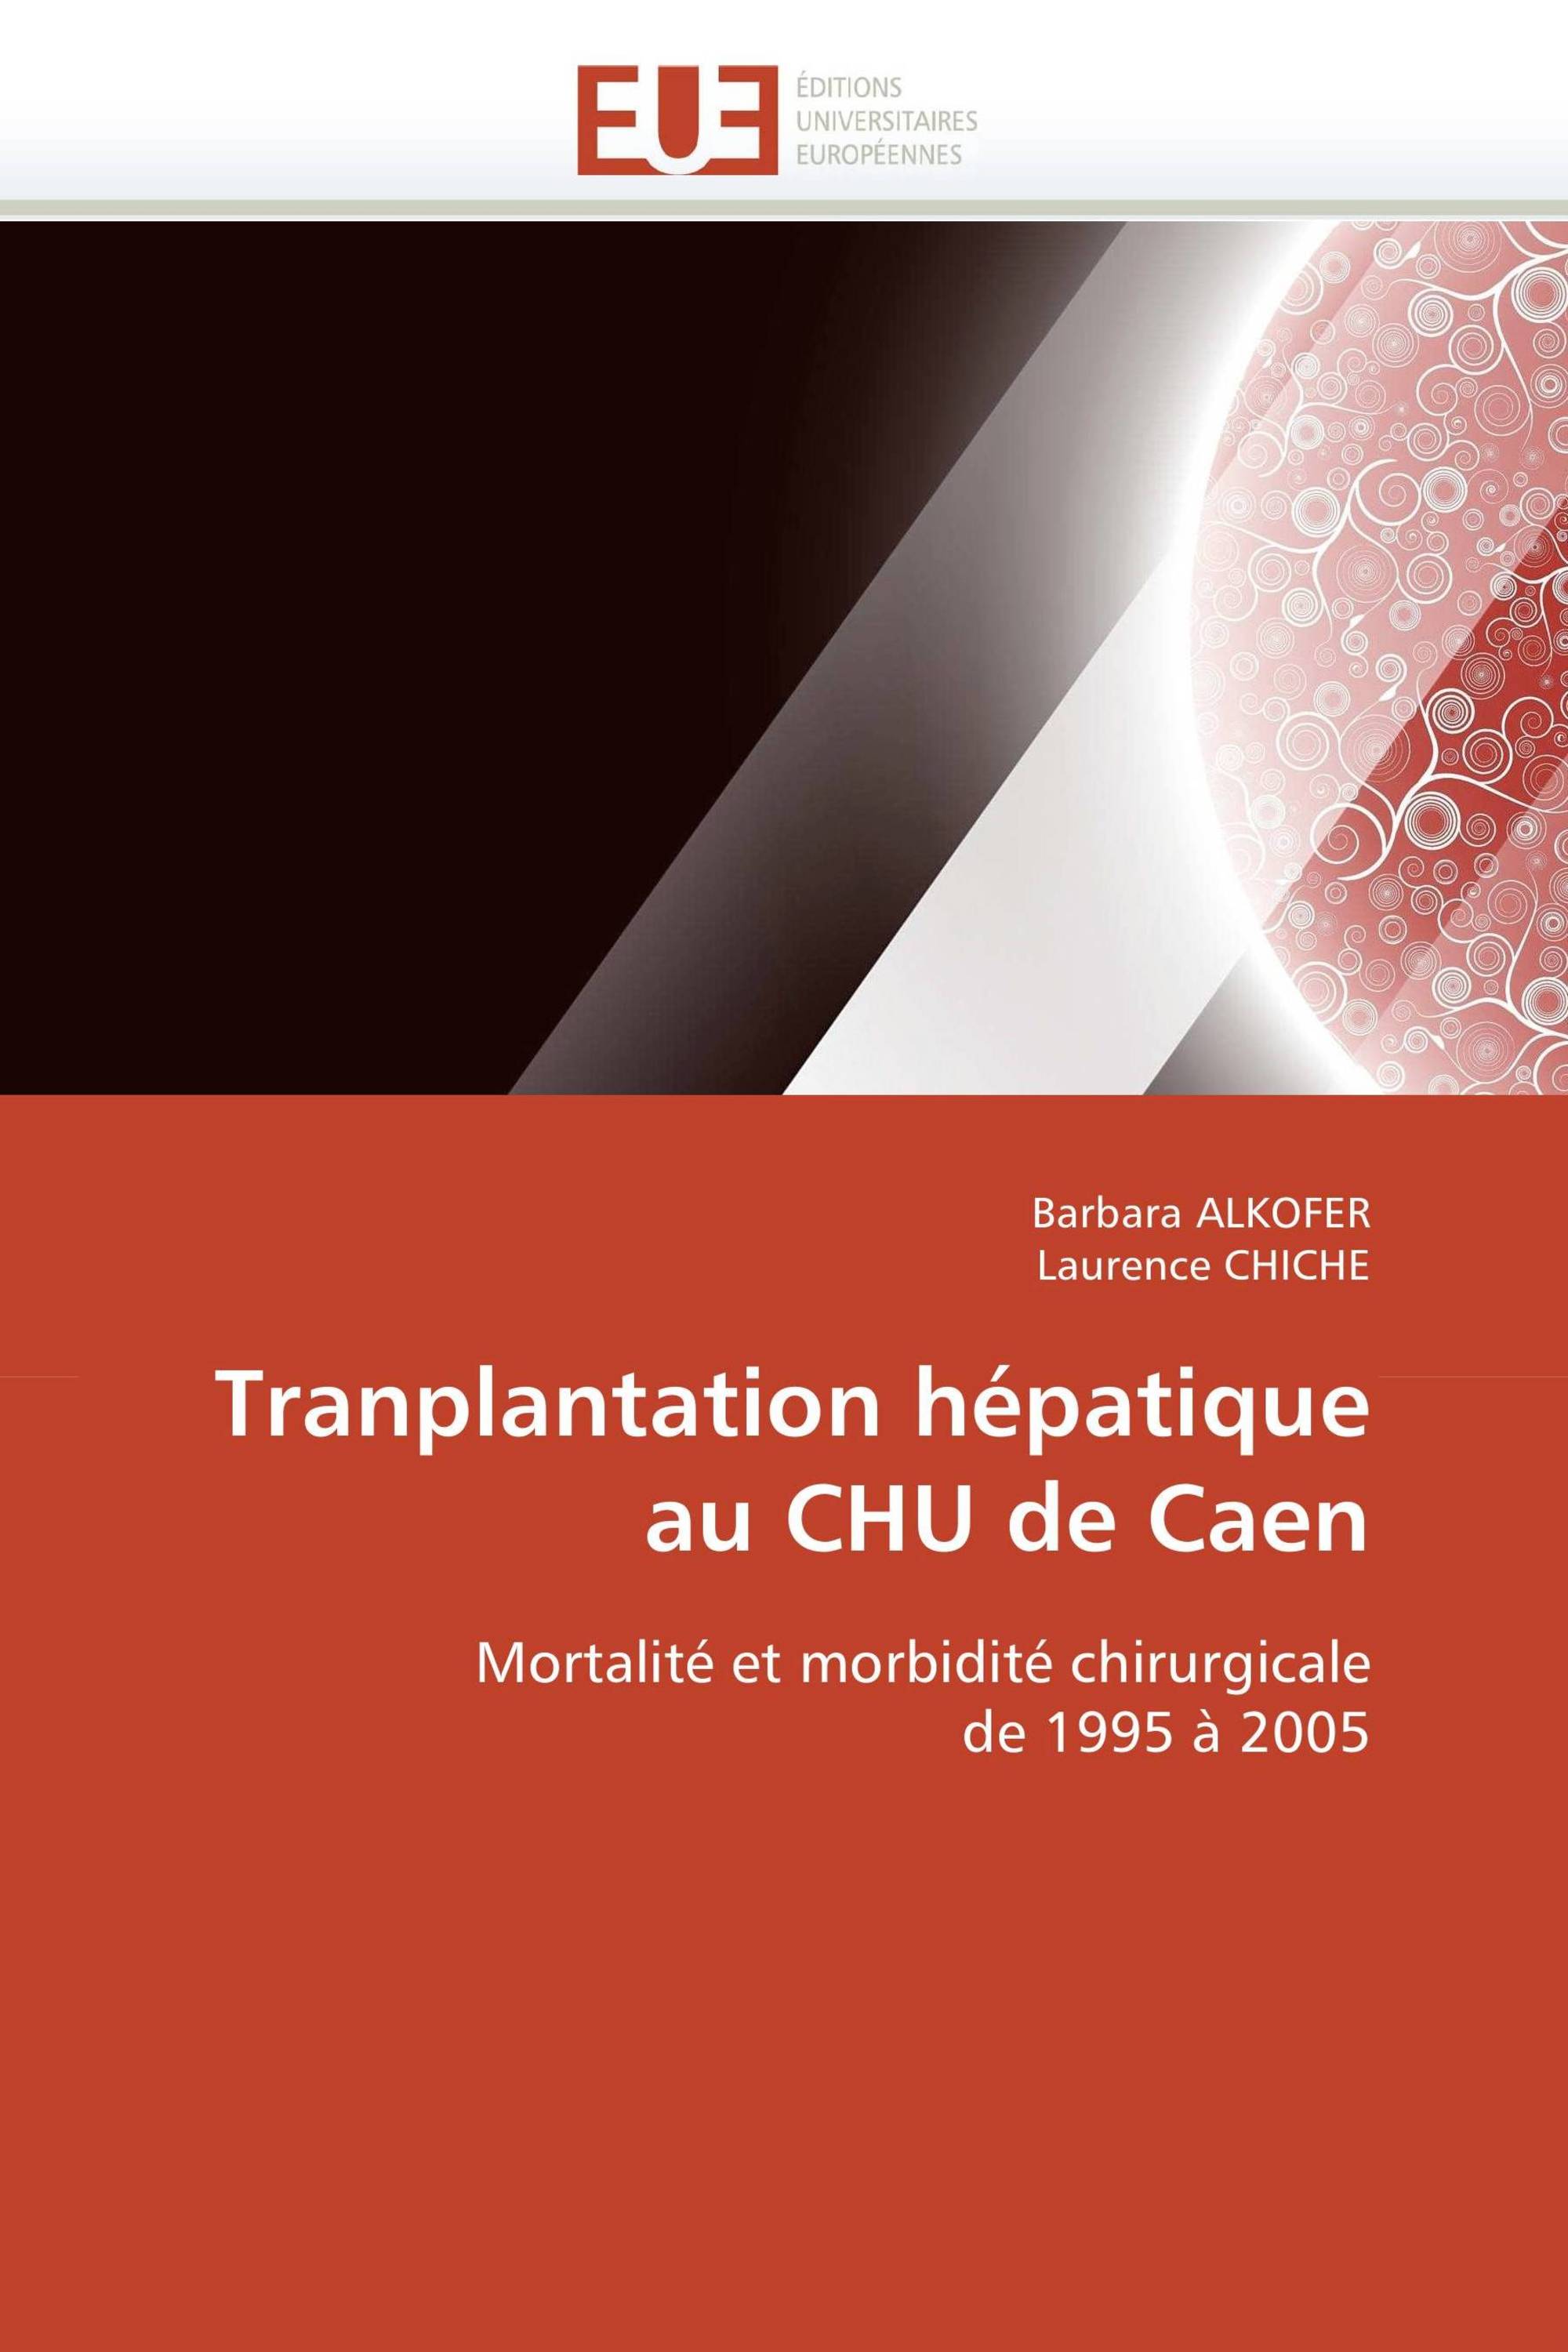 Tranplantation hépatique au CHU de Caen